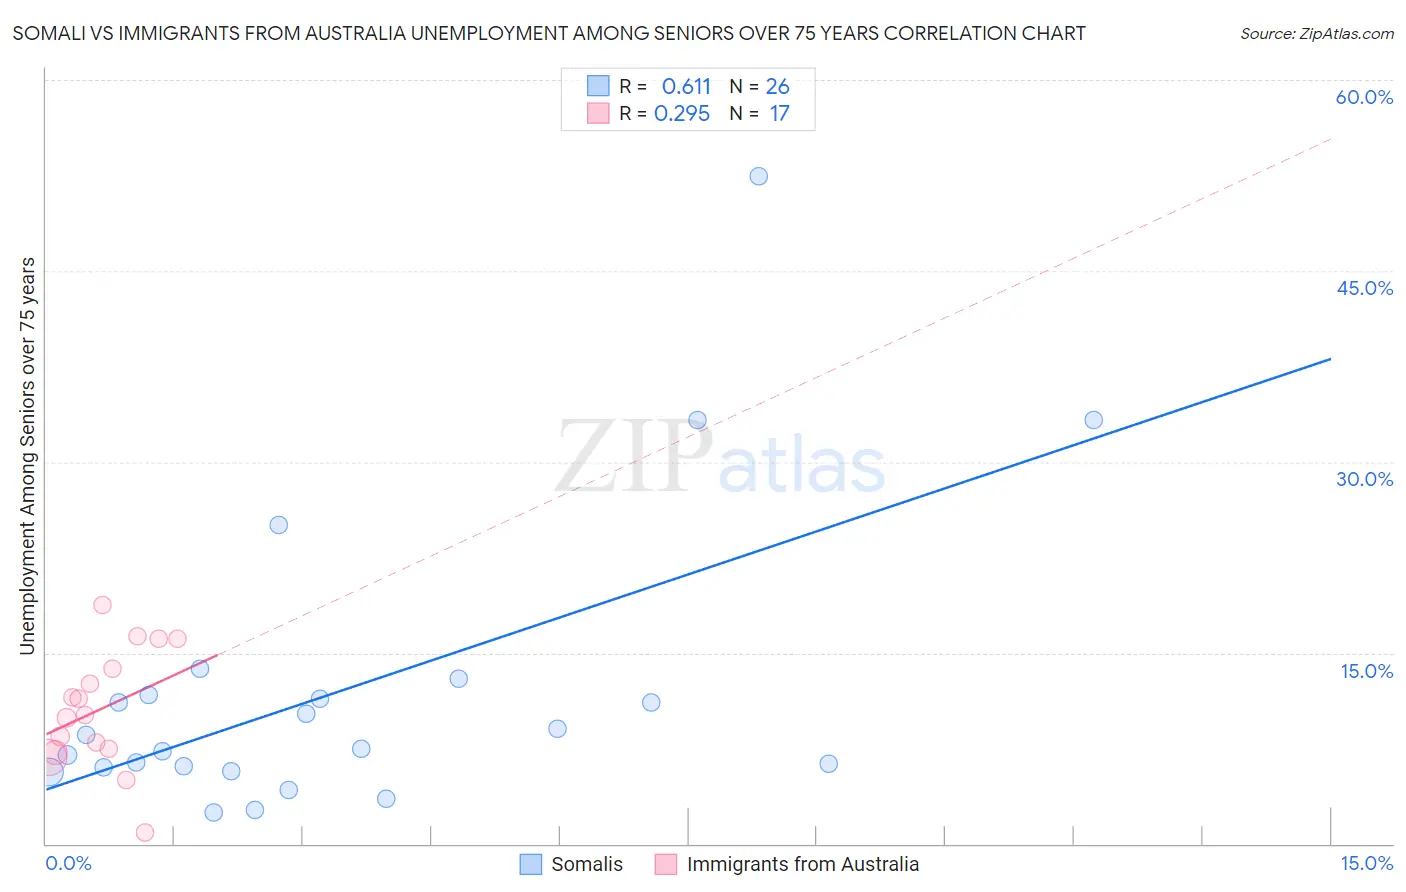 Somali vs Immigrants from Australia Unemployment Among Seniors over 75 years